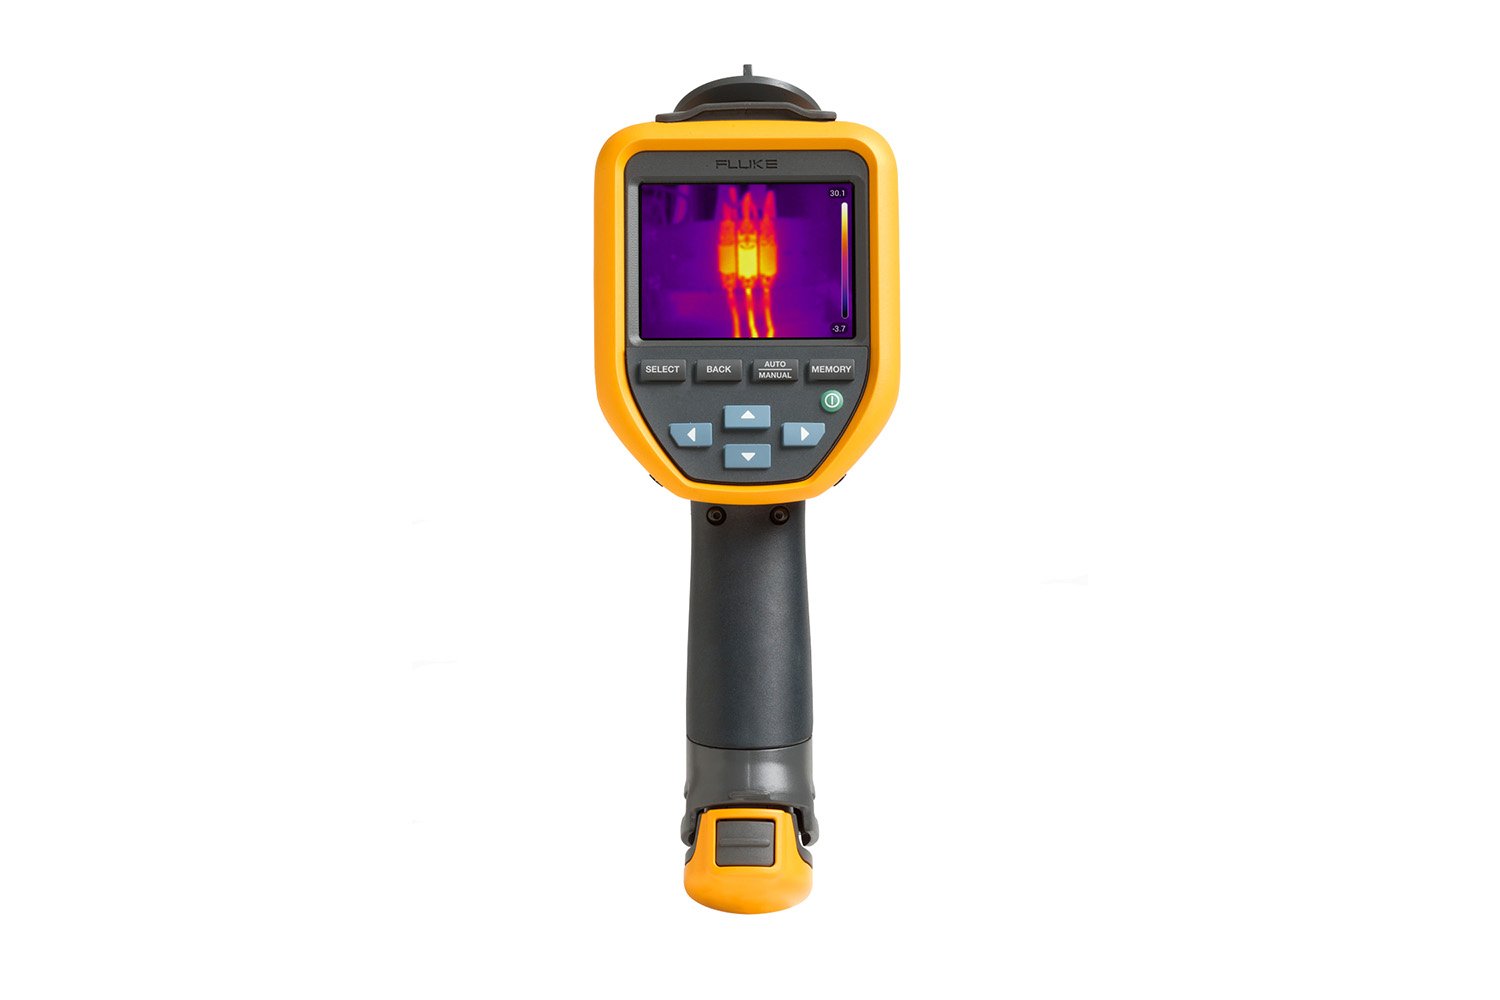 2.4 Inch Digital LCD Display Screen Portable Handheld Infrared Thermal Imager Thermal Imaging Camera Thermometer Measurement Instrument Multipurpose Detection Tool 